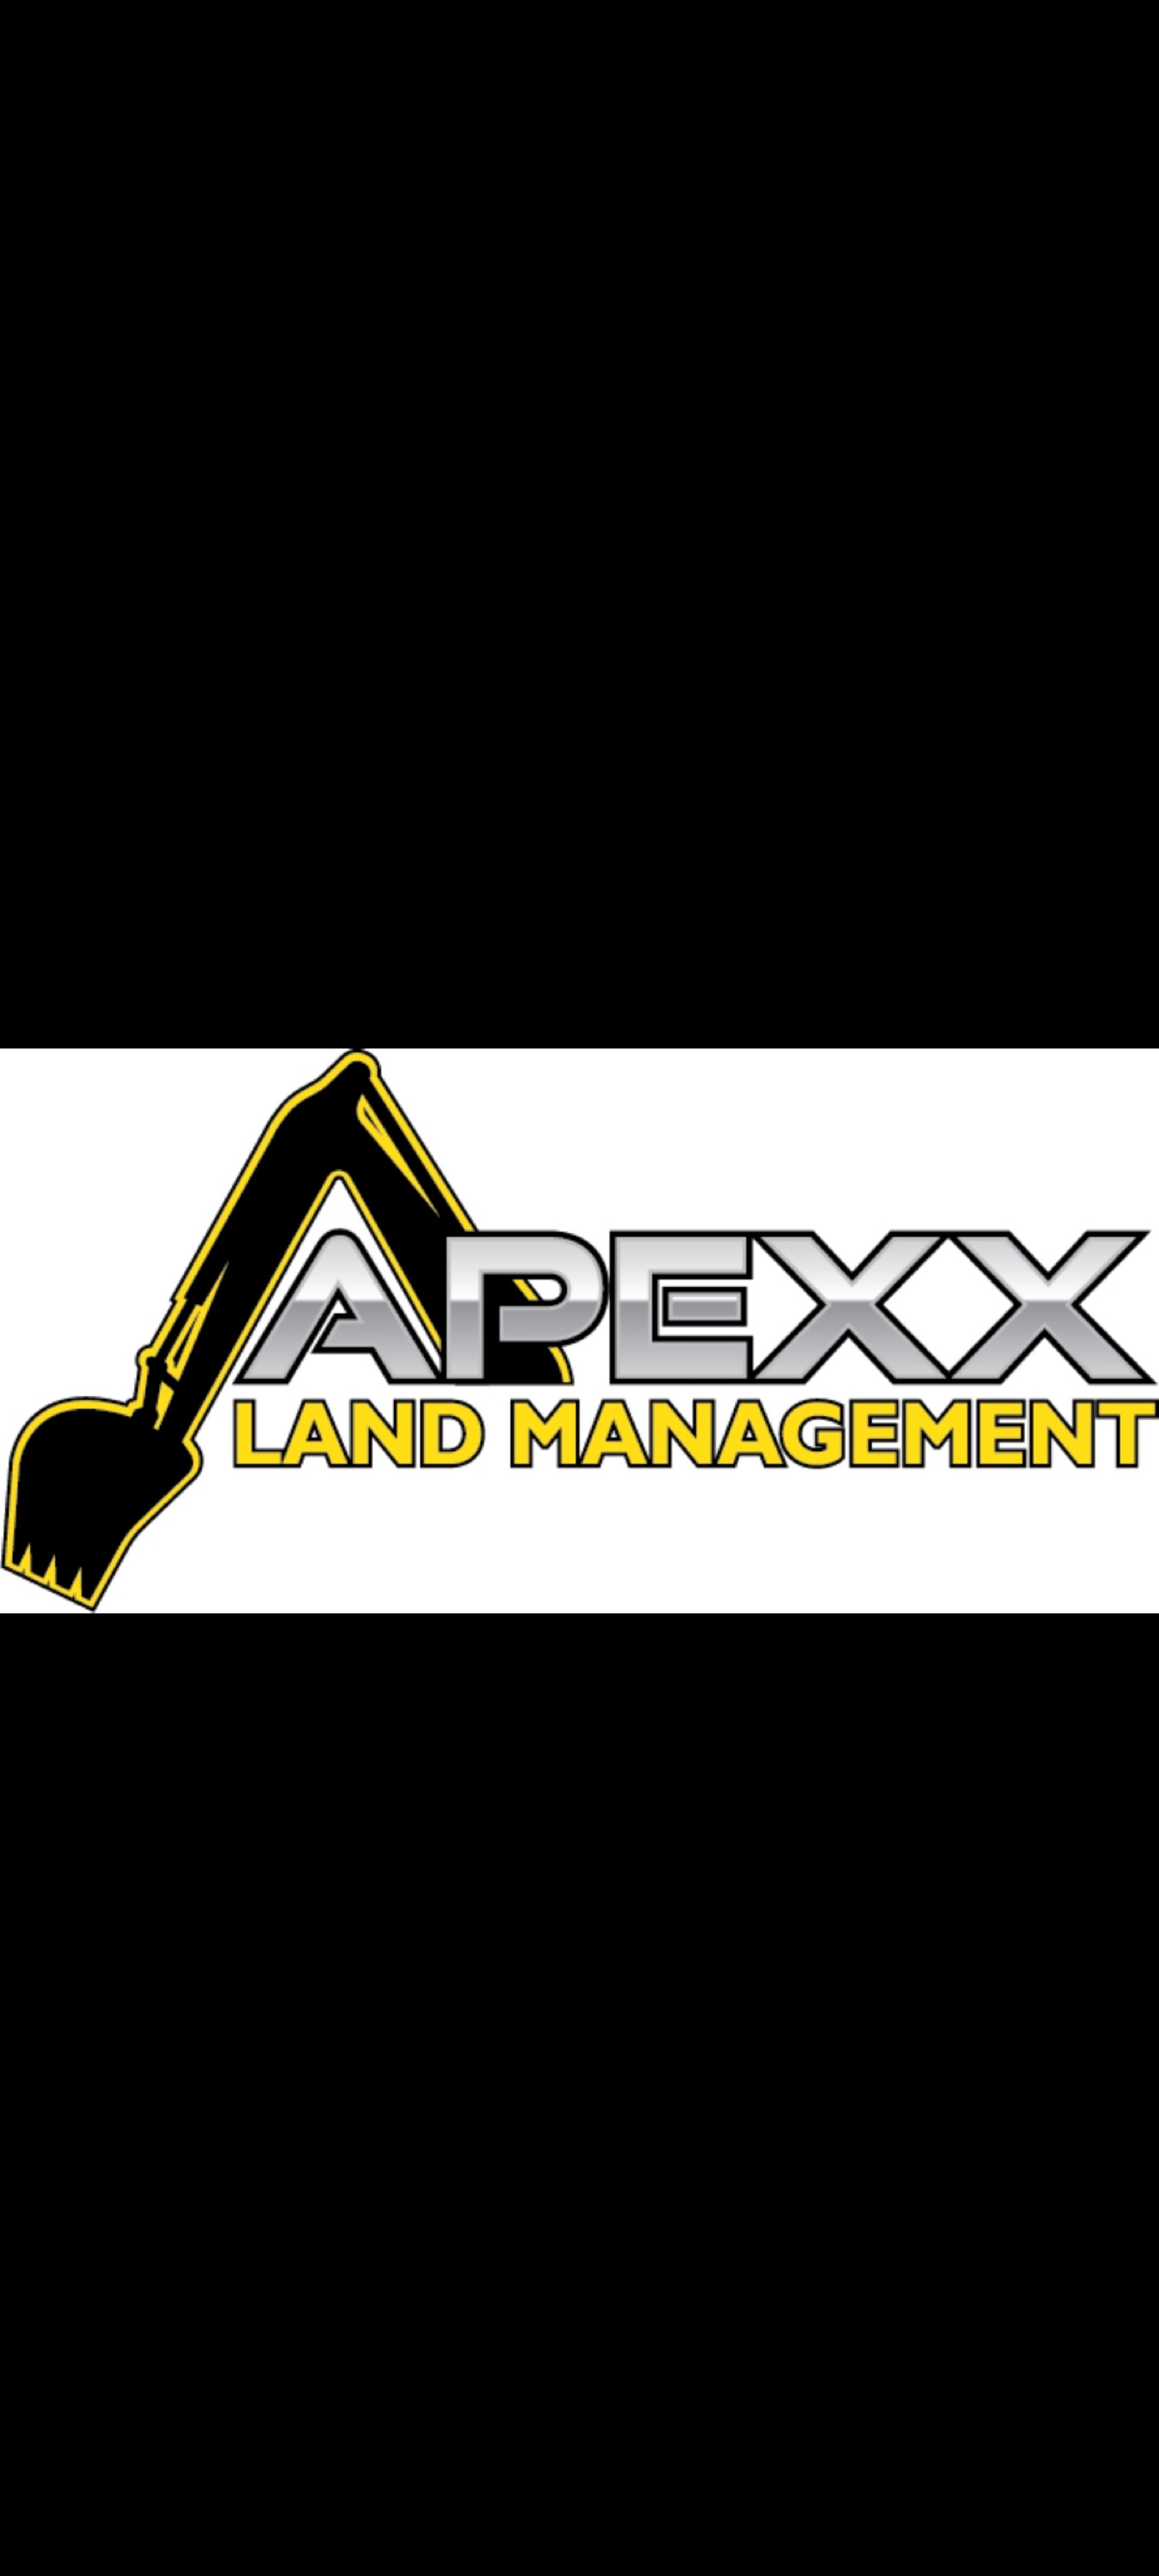 Apexx Land Management Logo